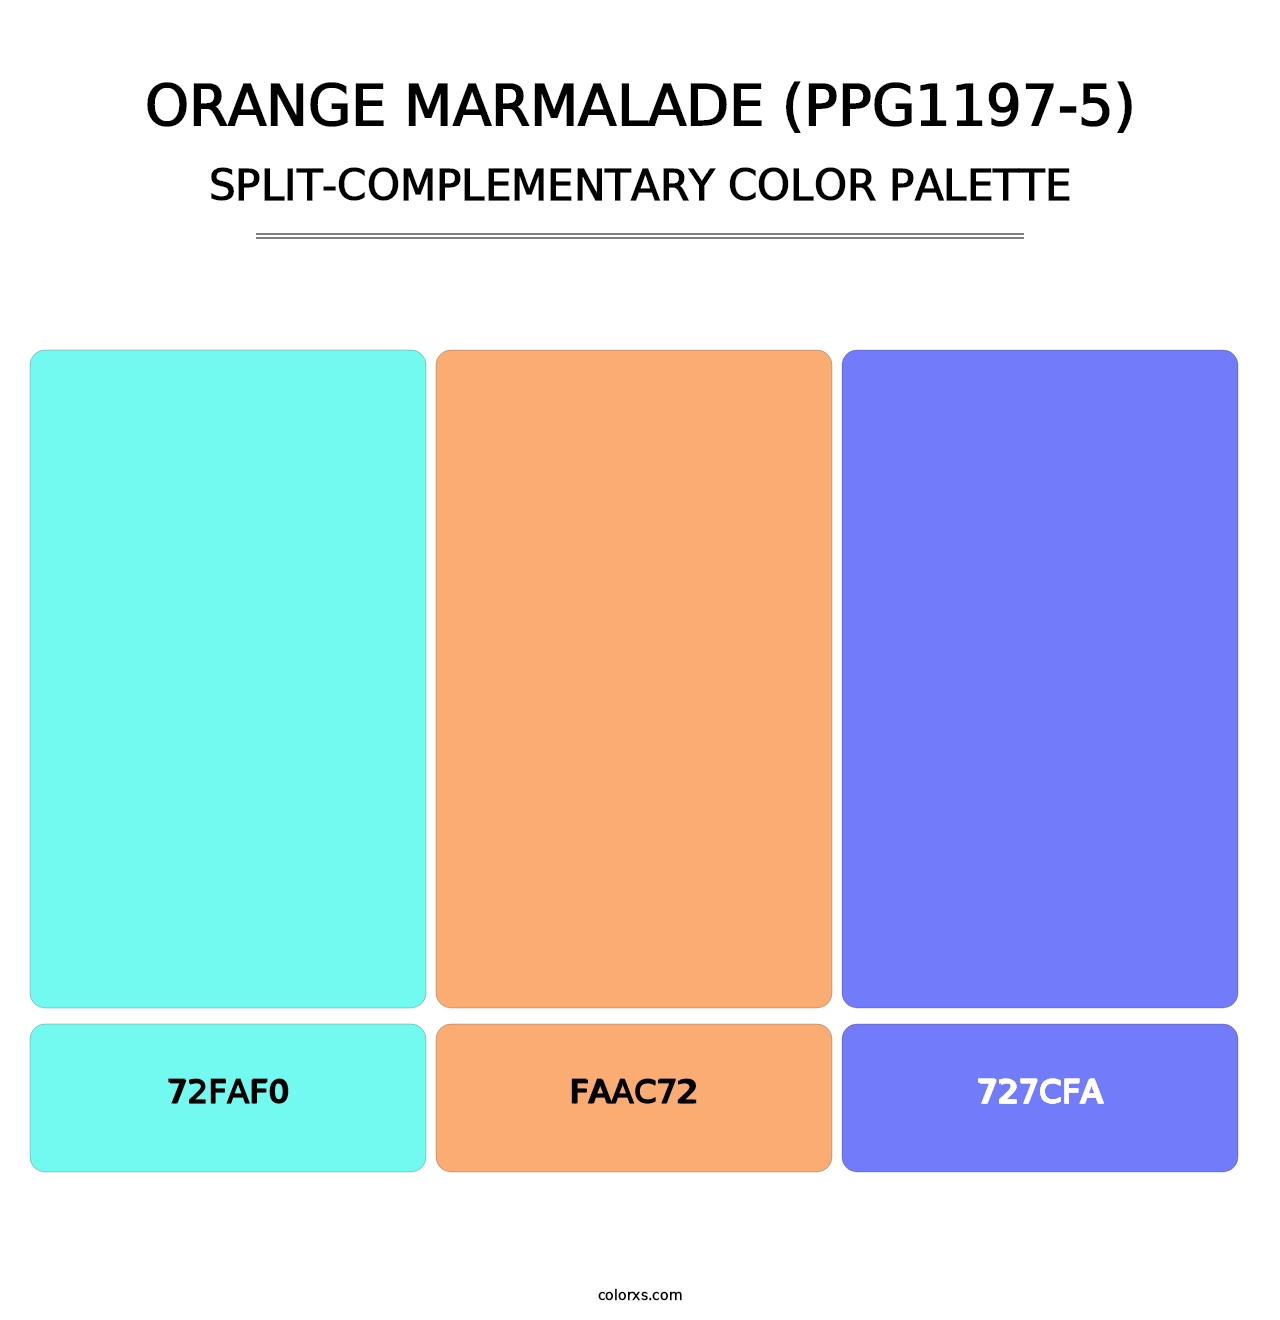 Orange Marmalade (PPG1197-5) - Split-Complementary Color Palette